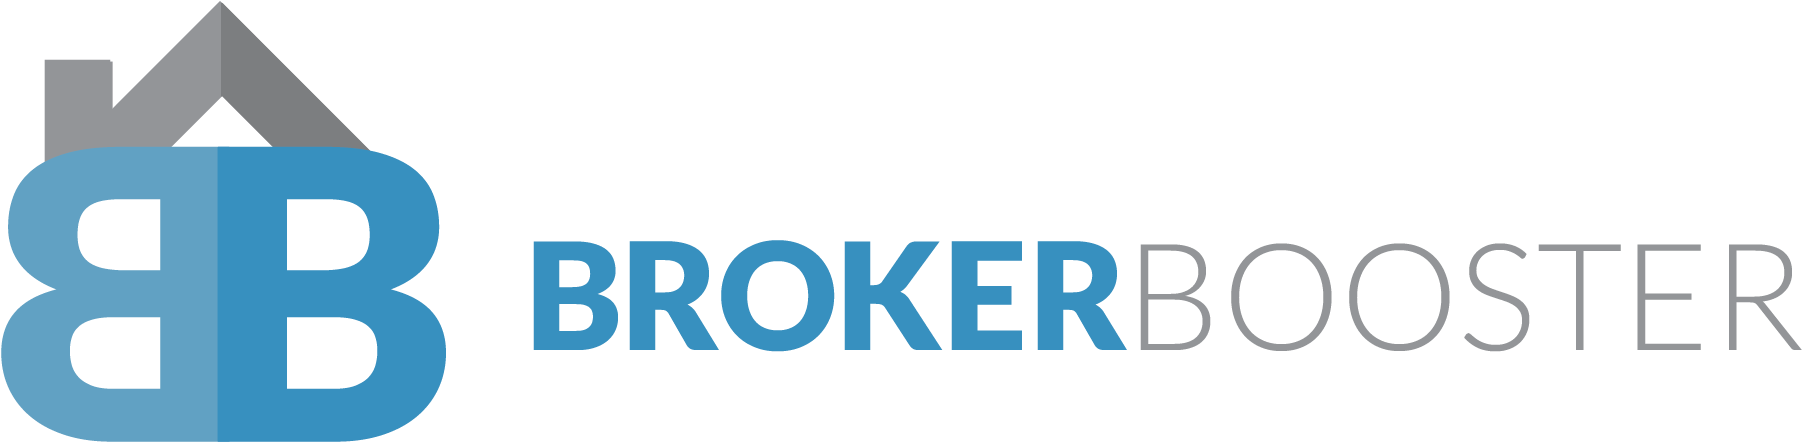 Broker Booster - Easy Rent Pro (1846x504)